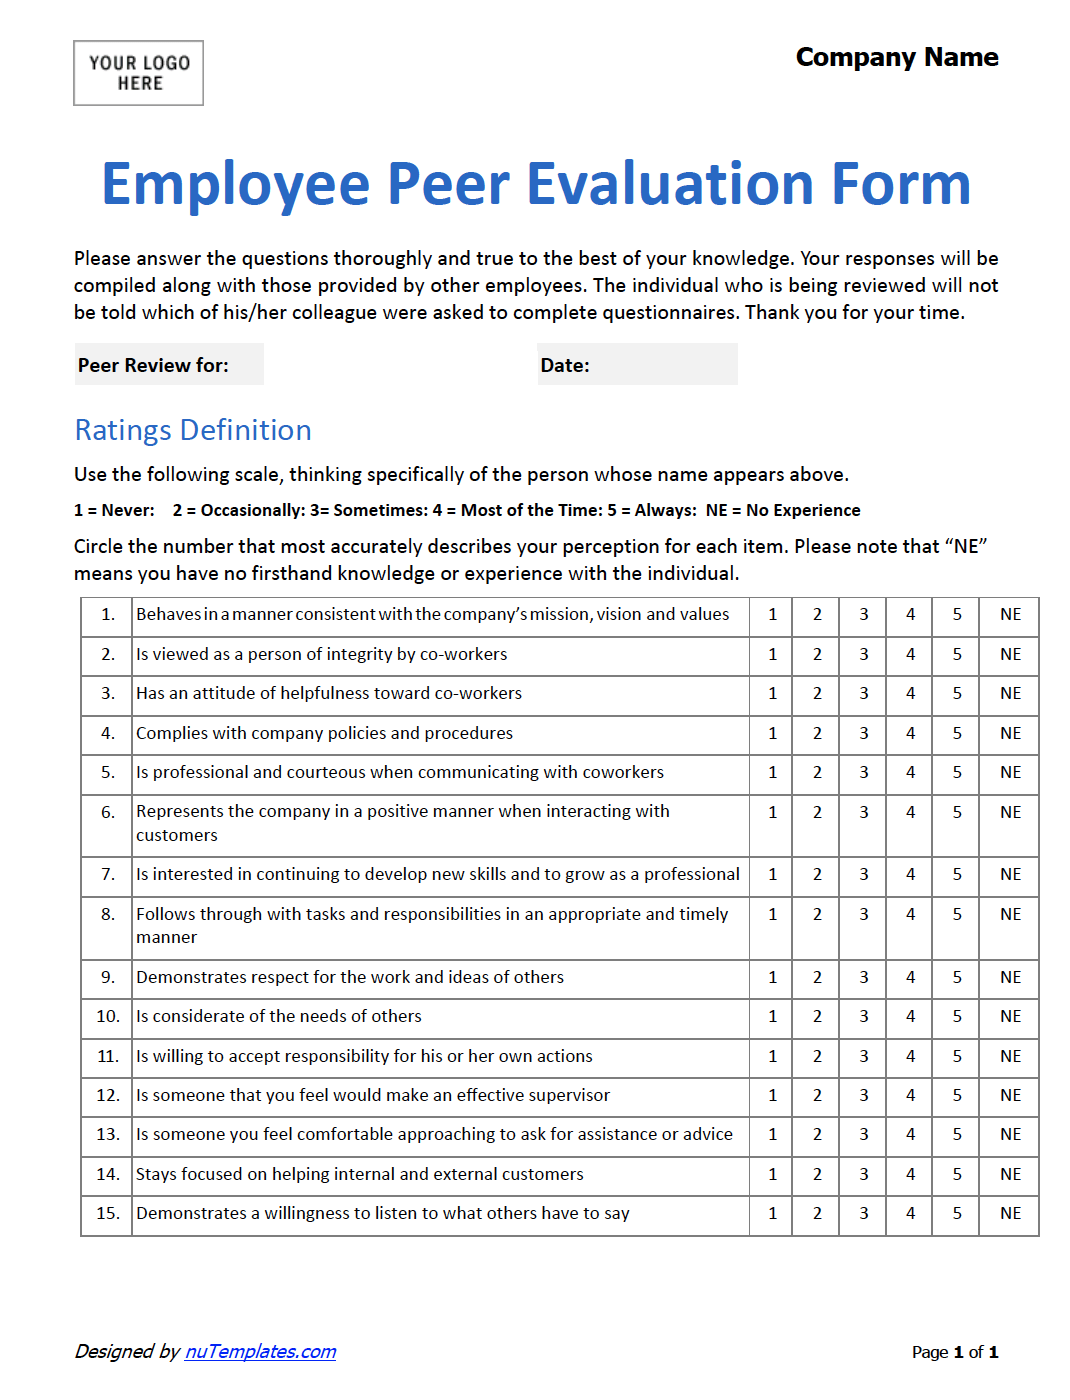 employee-peer-evaluation-form